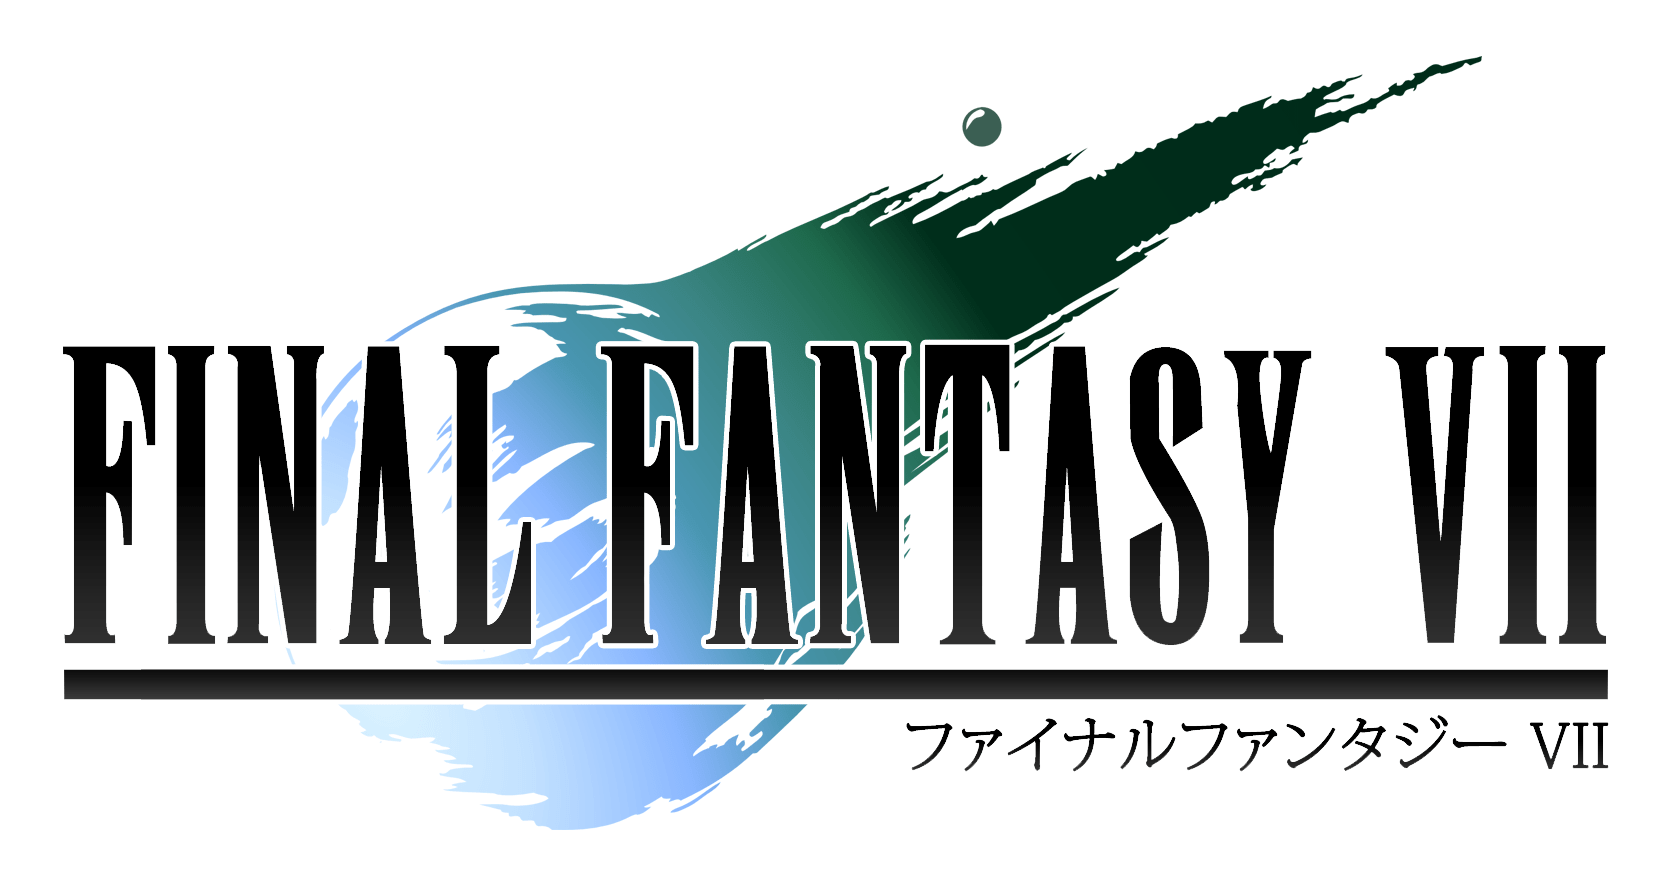 Final Fantasy Viii Logo